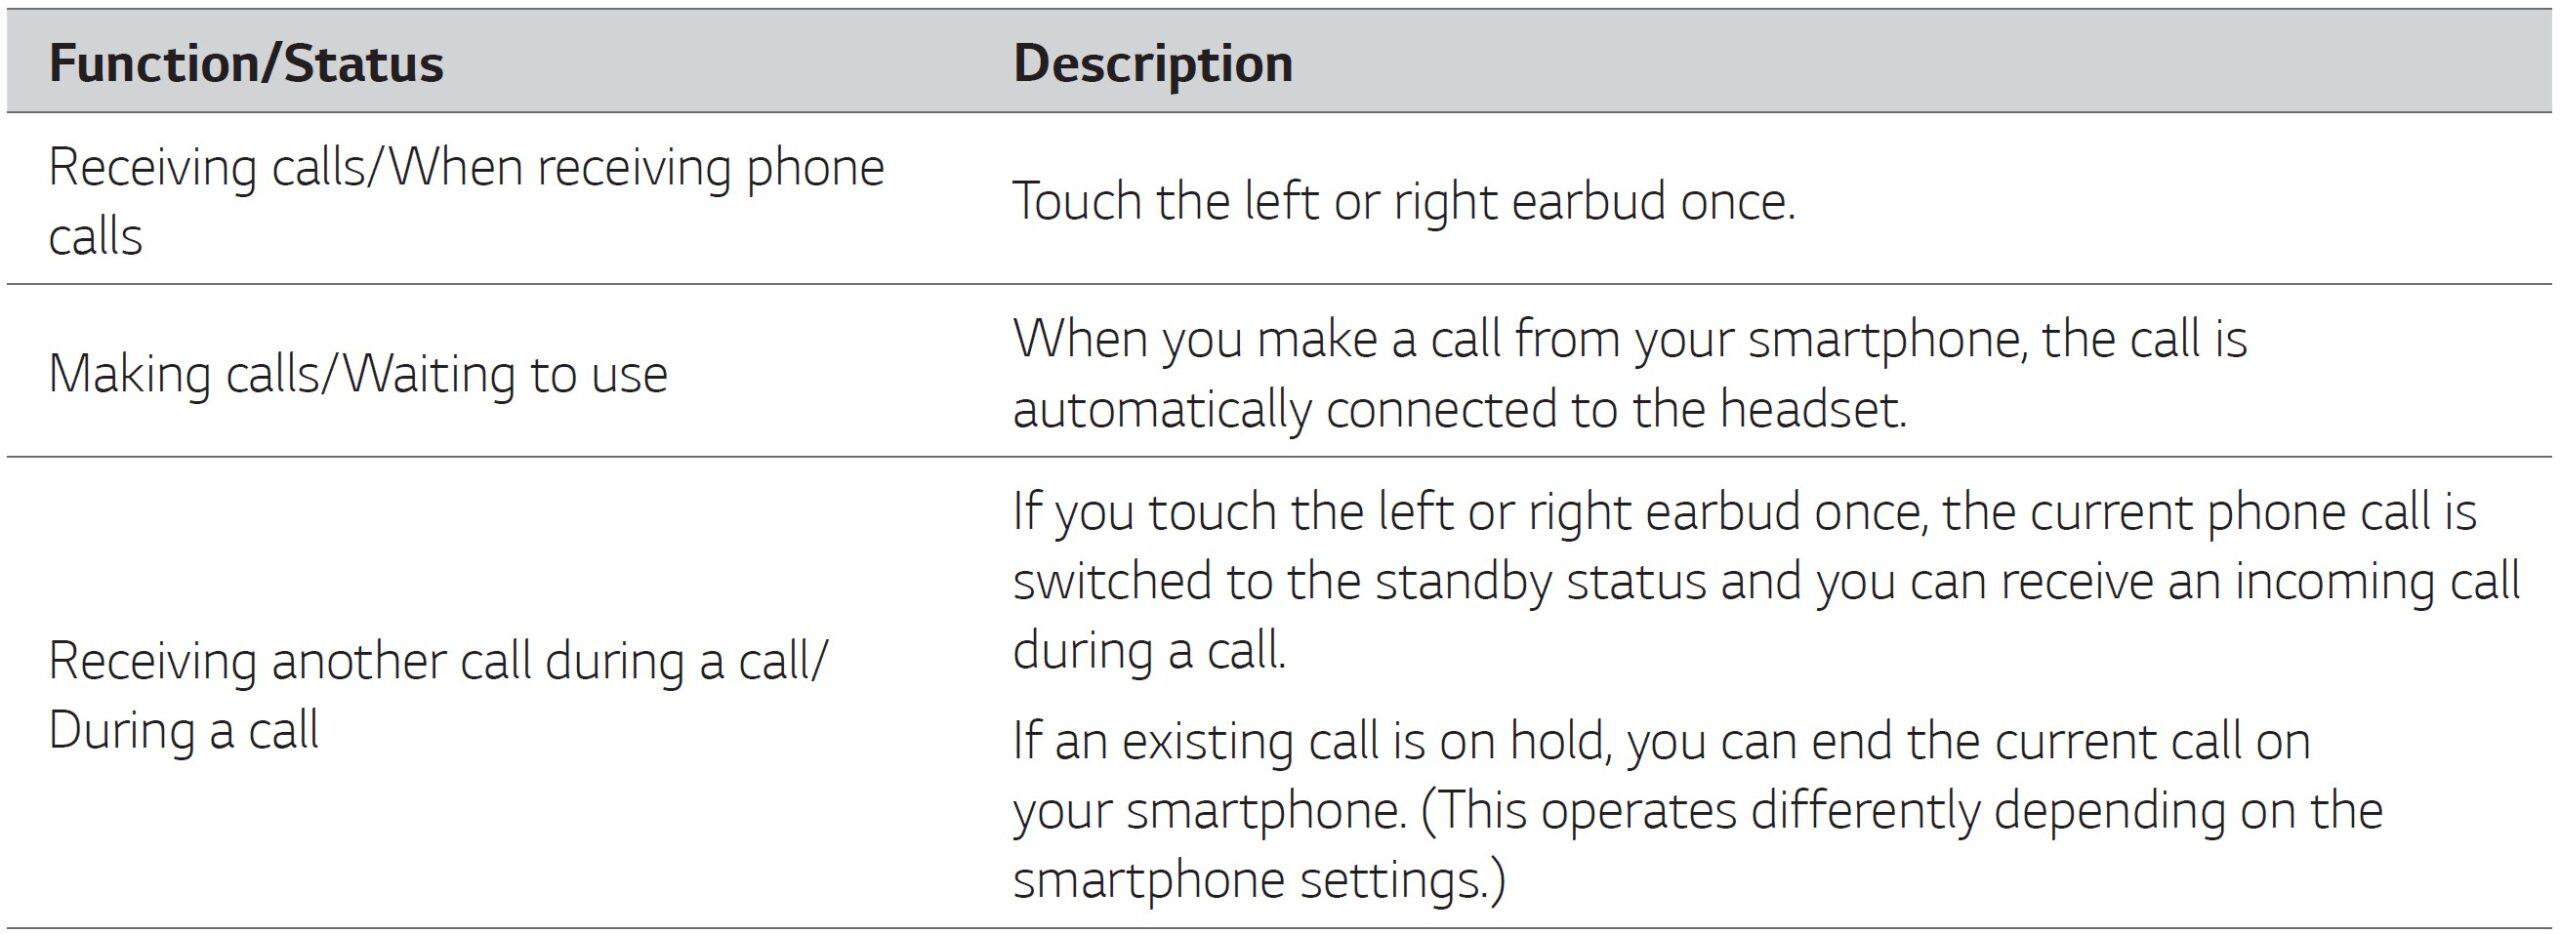 LG-Tone-Free-T90-Wireless-Bluetooth-Earbuds-User-Manual-16